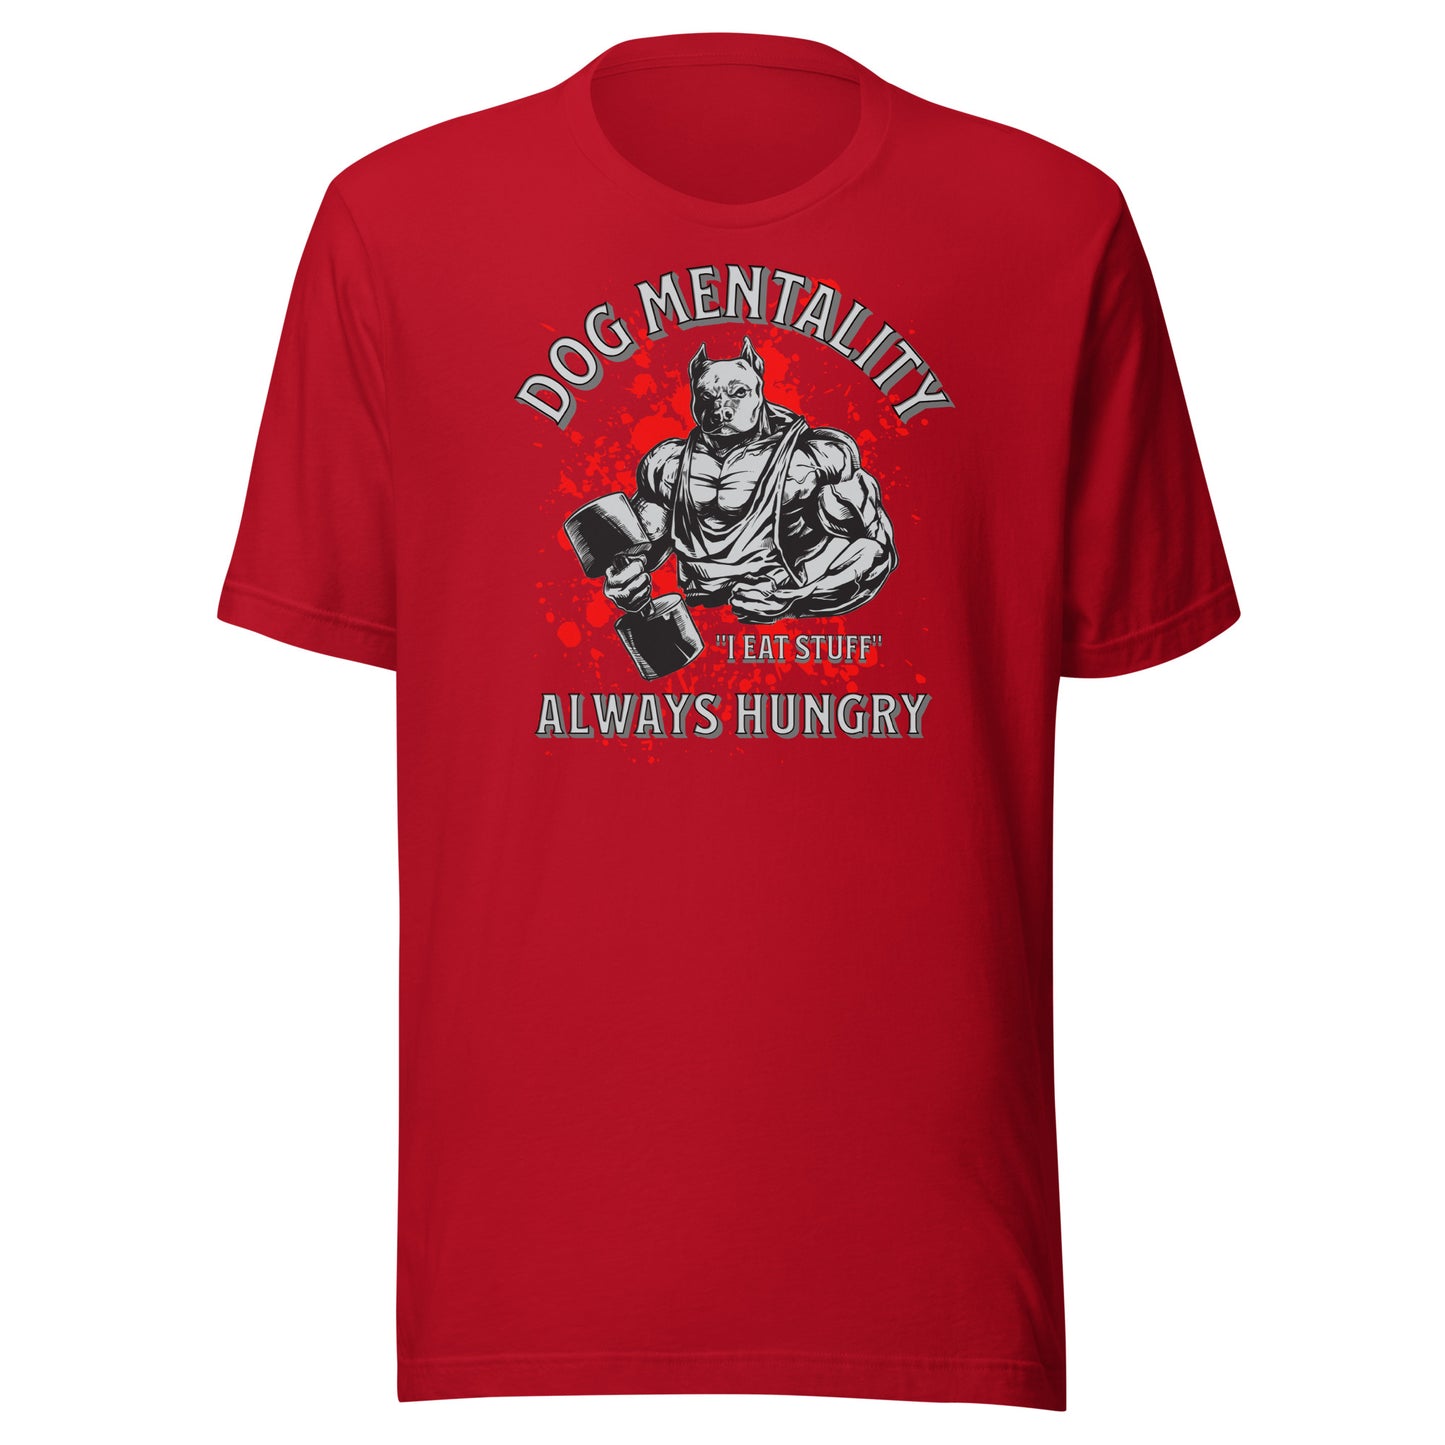 Dog Mentality: Always Hungry Unisex T-shirt